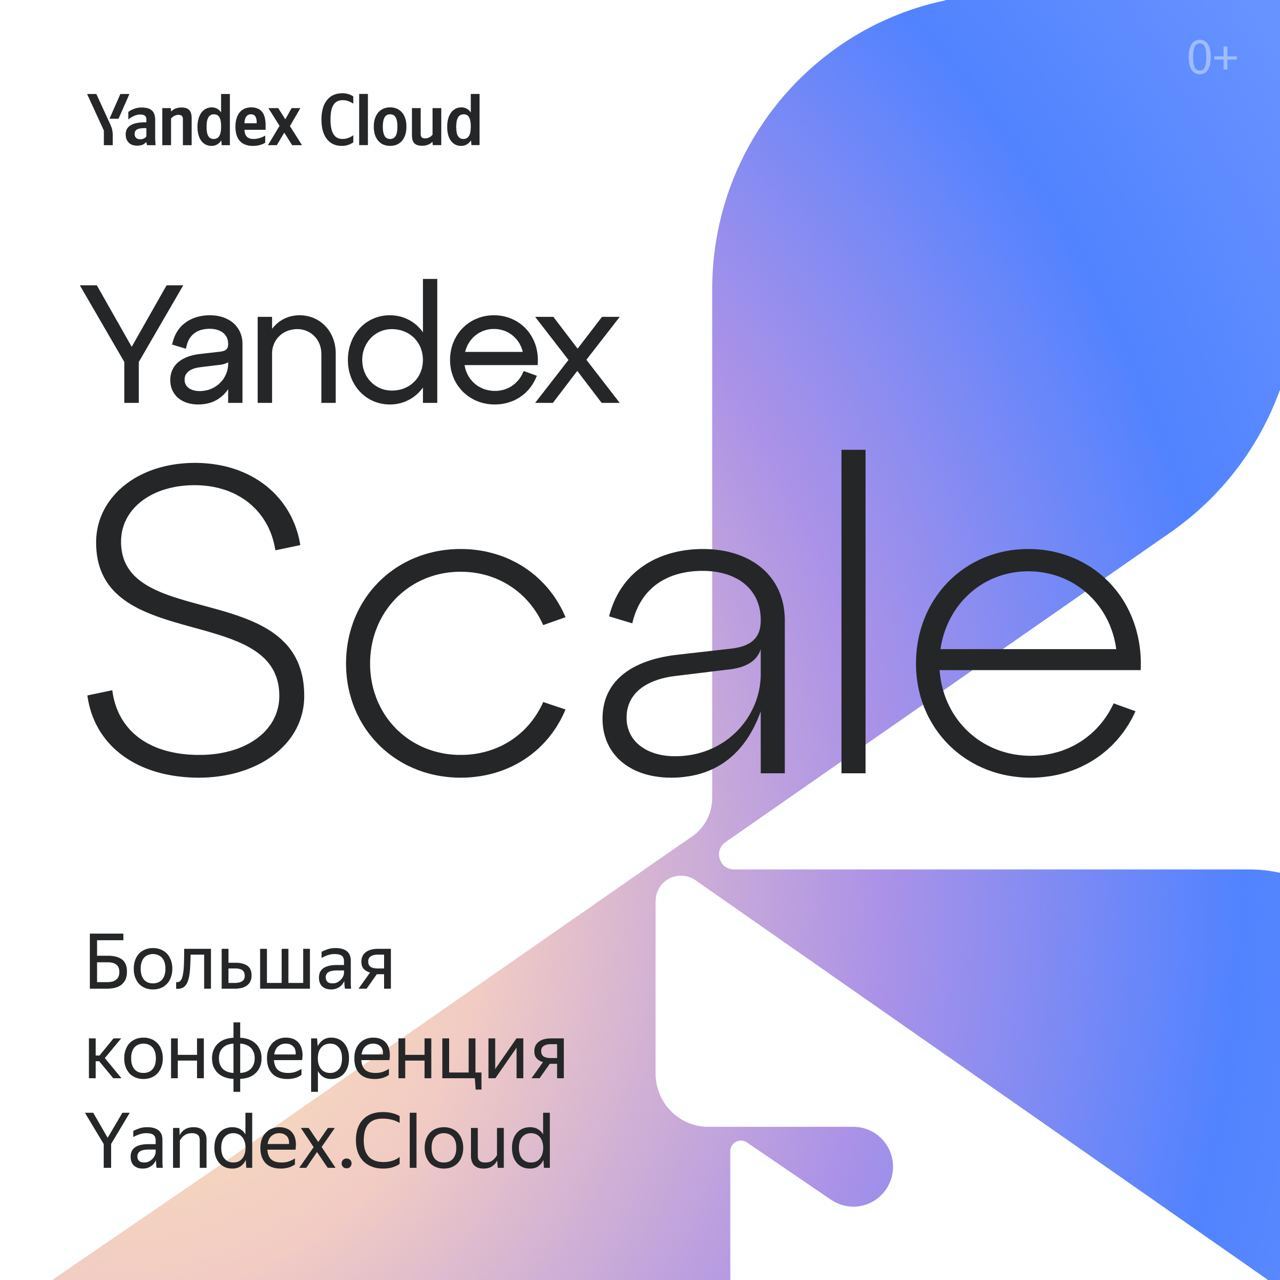 Yandex Scale 2021 пройдет онлайн 24 сентября